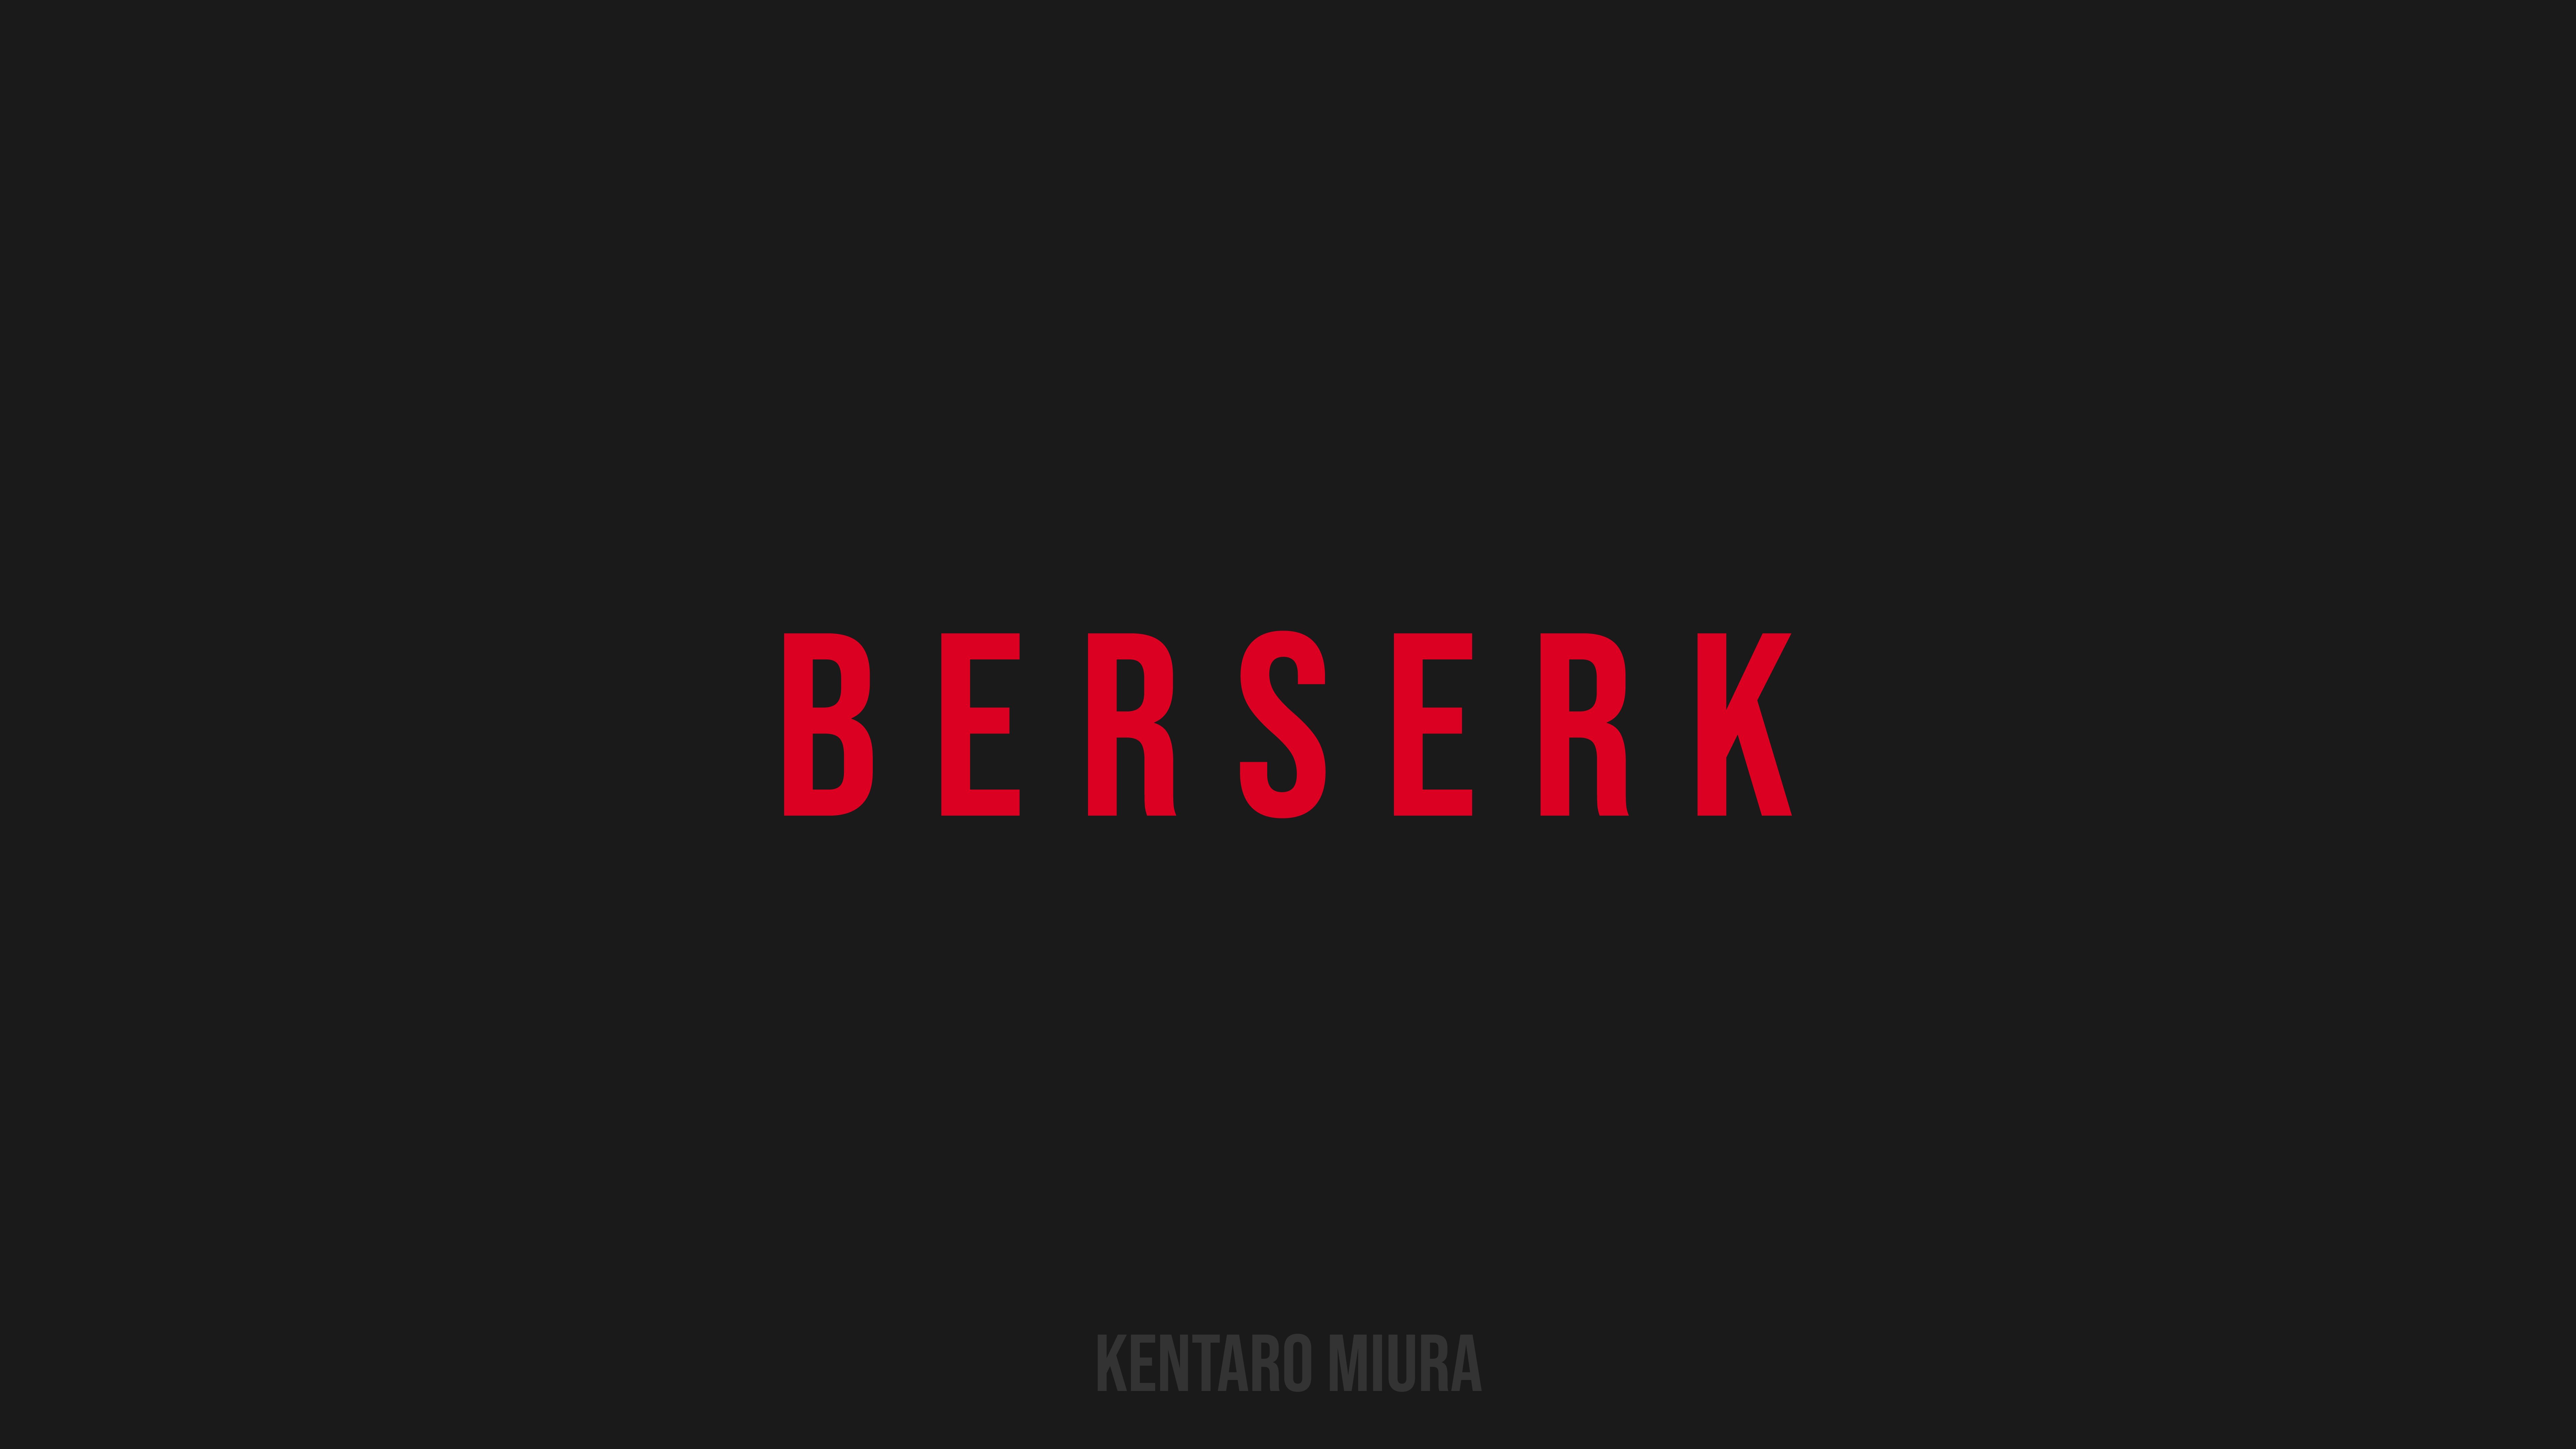 Some Berserk title cards | /u/Az21 - Image Chest - Free Image Hosting ...